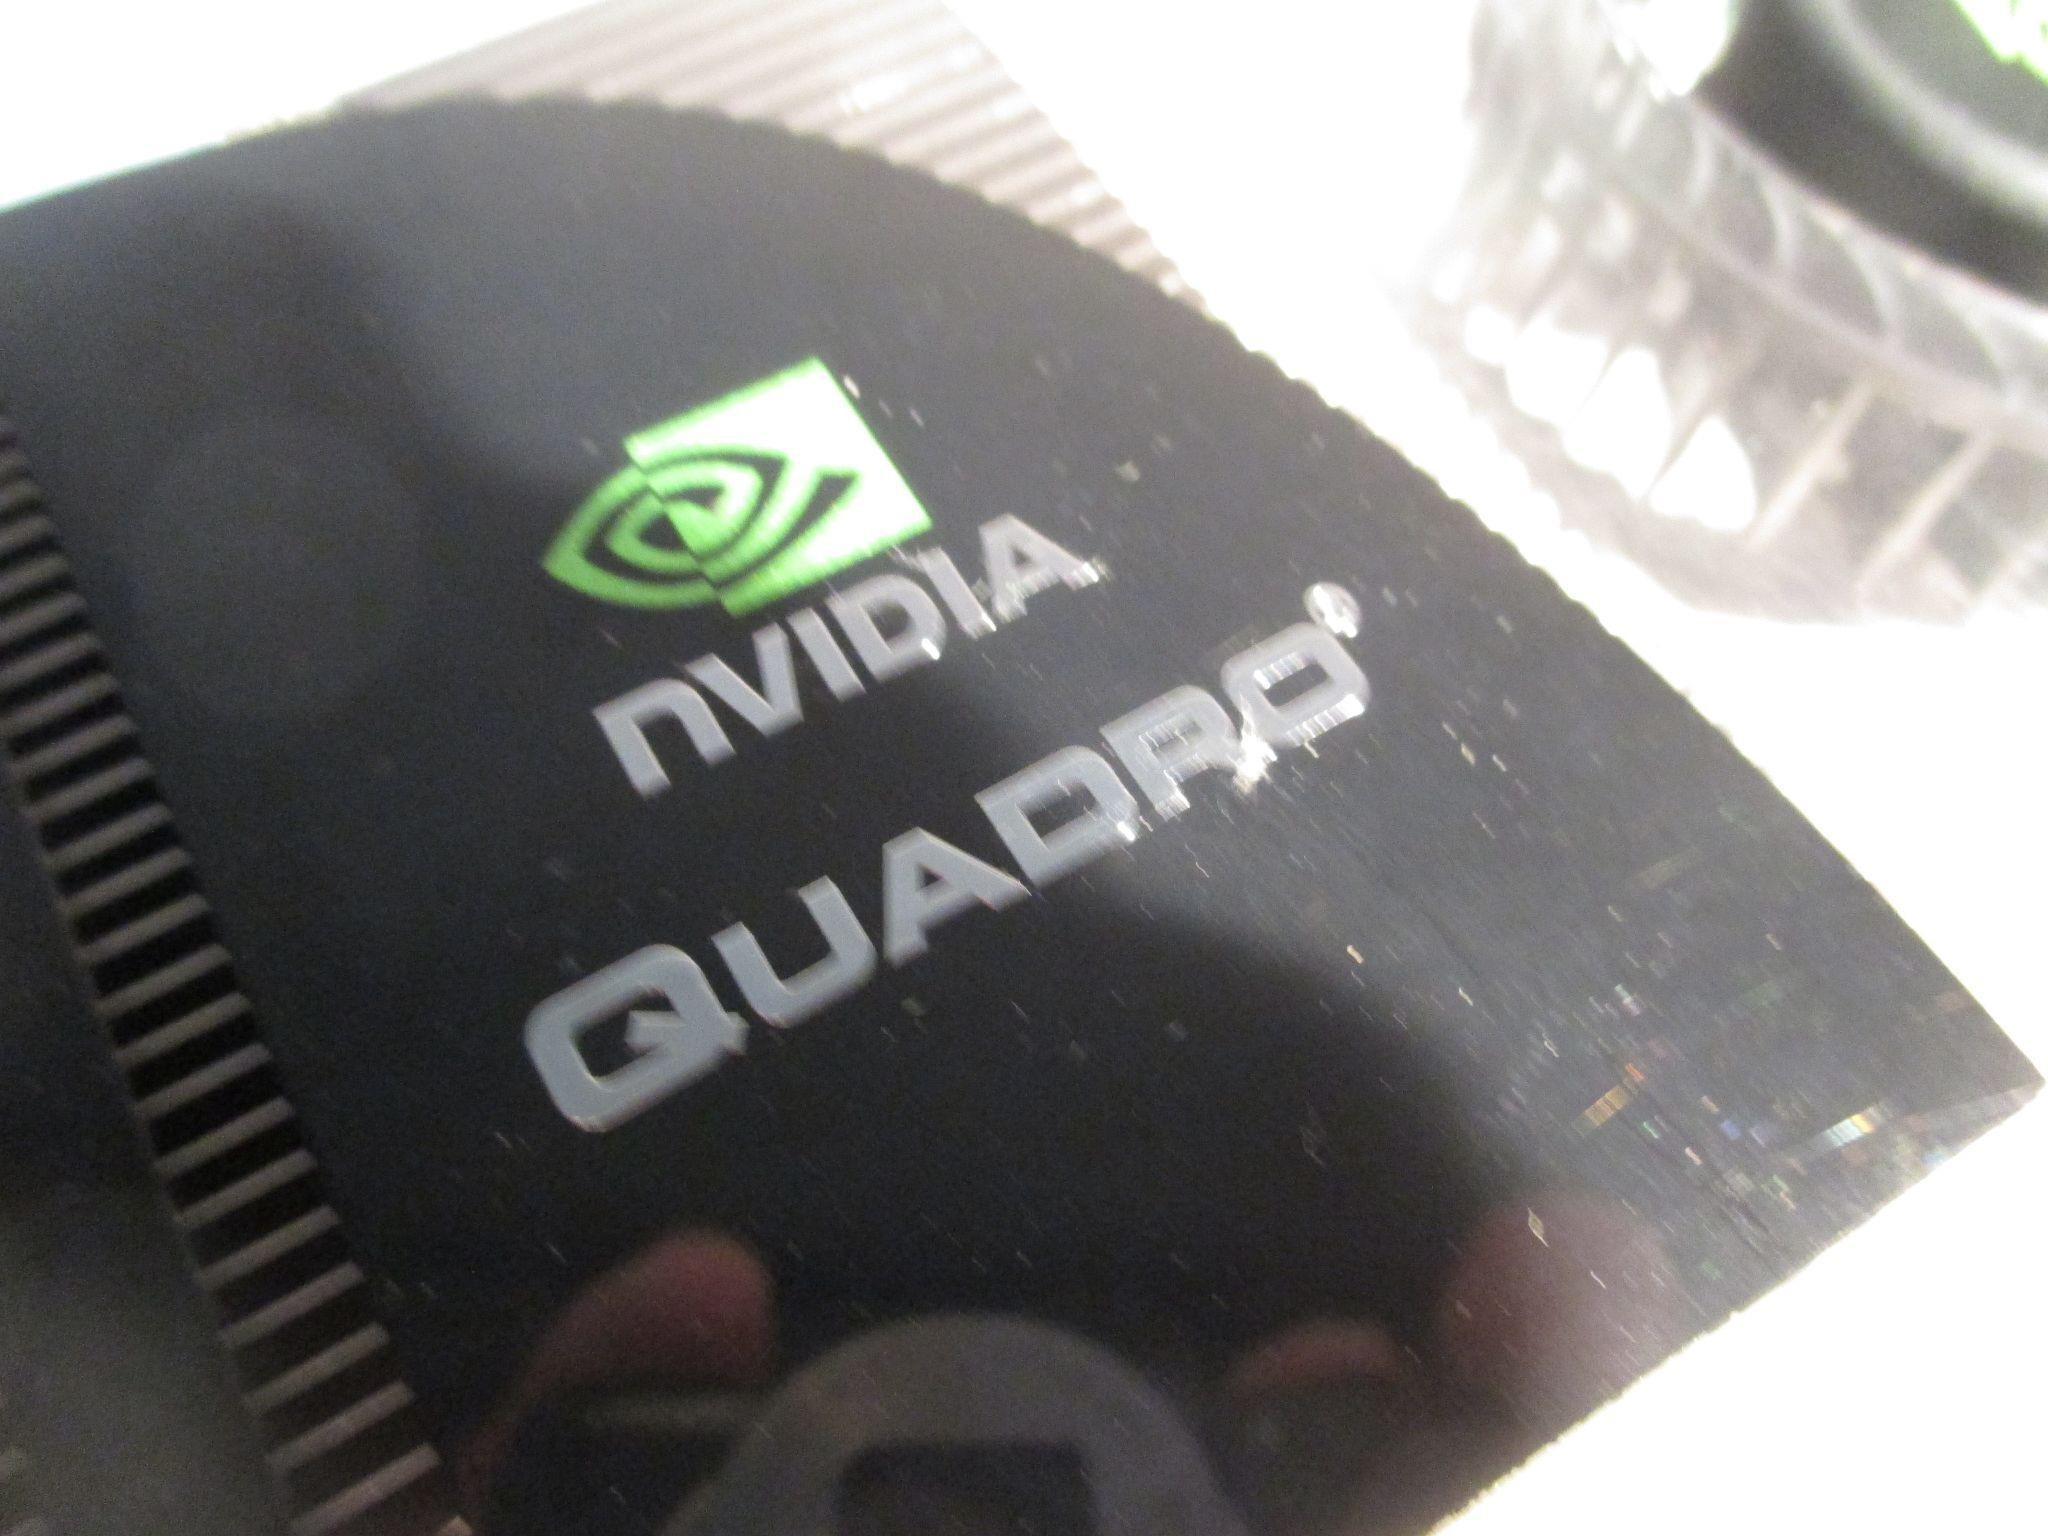 Nvidia Quadro graphics card